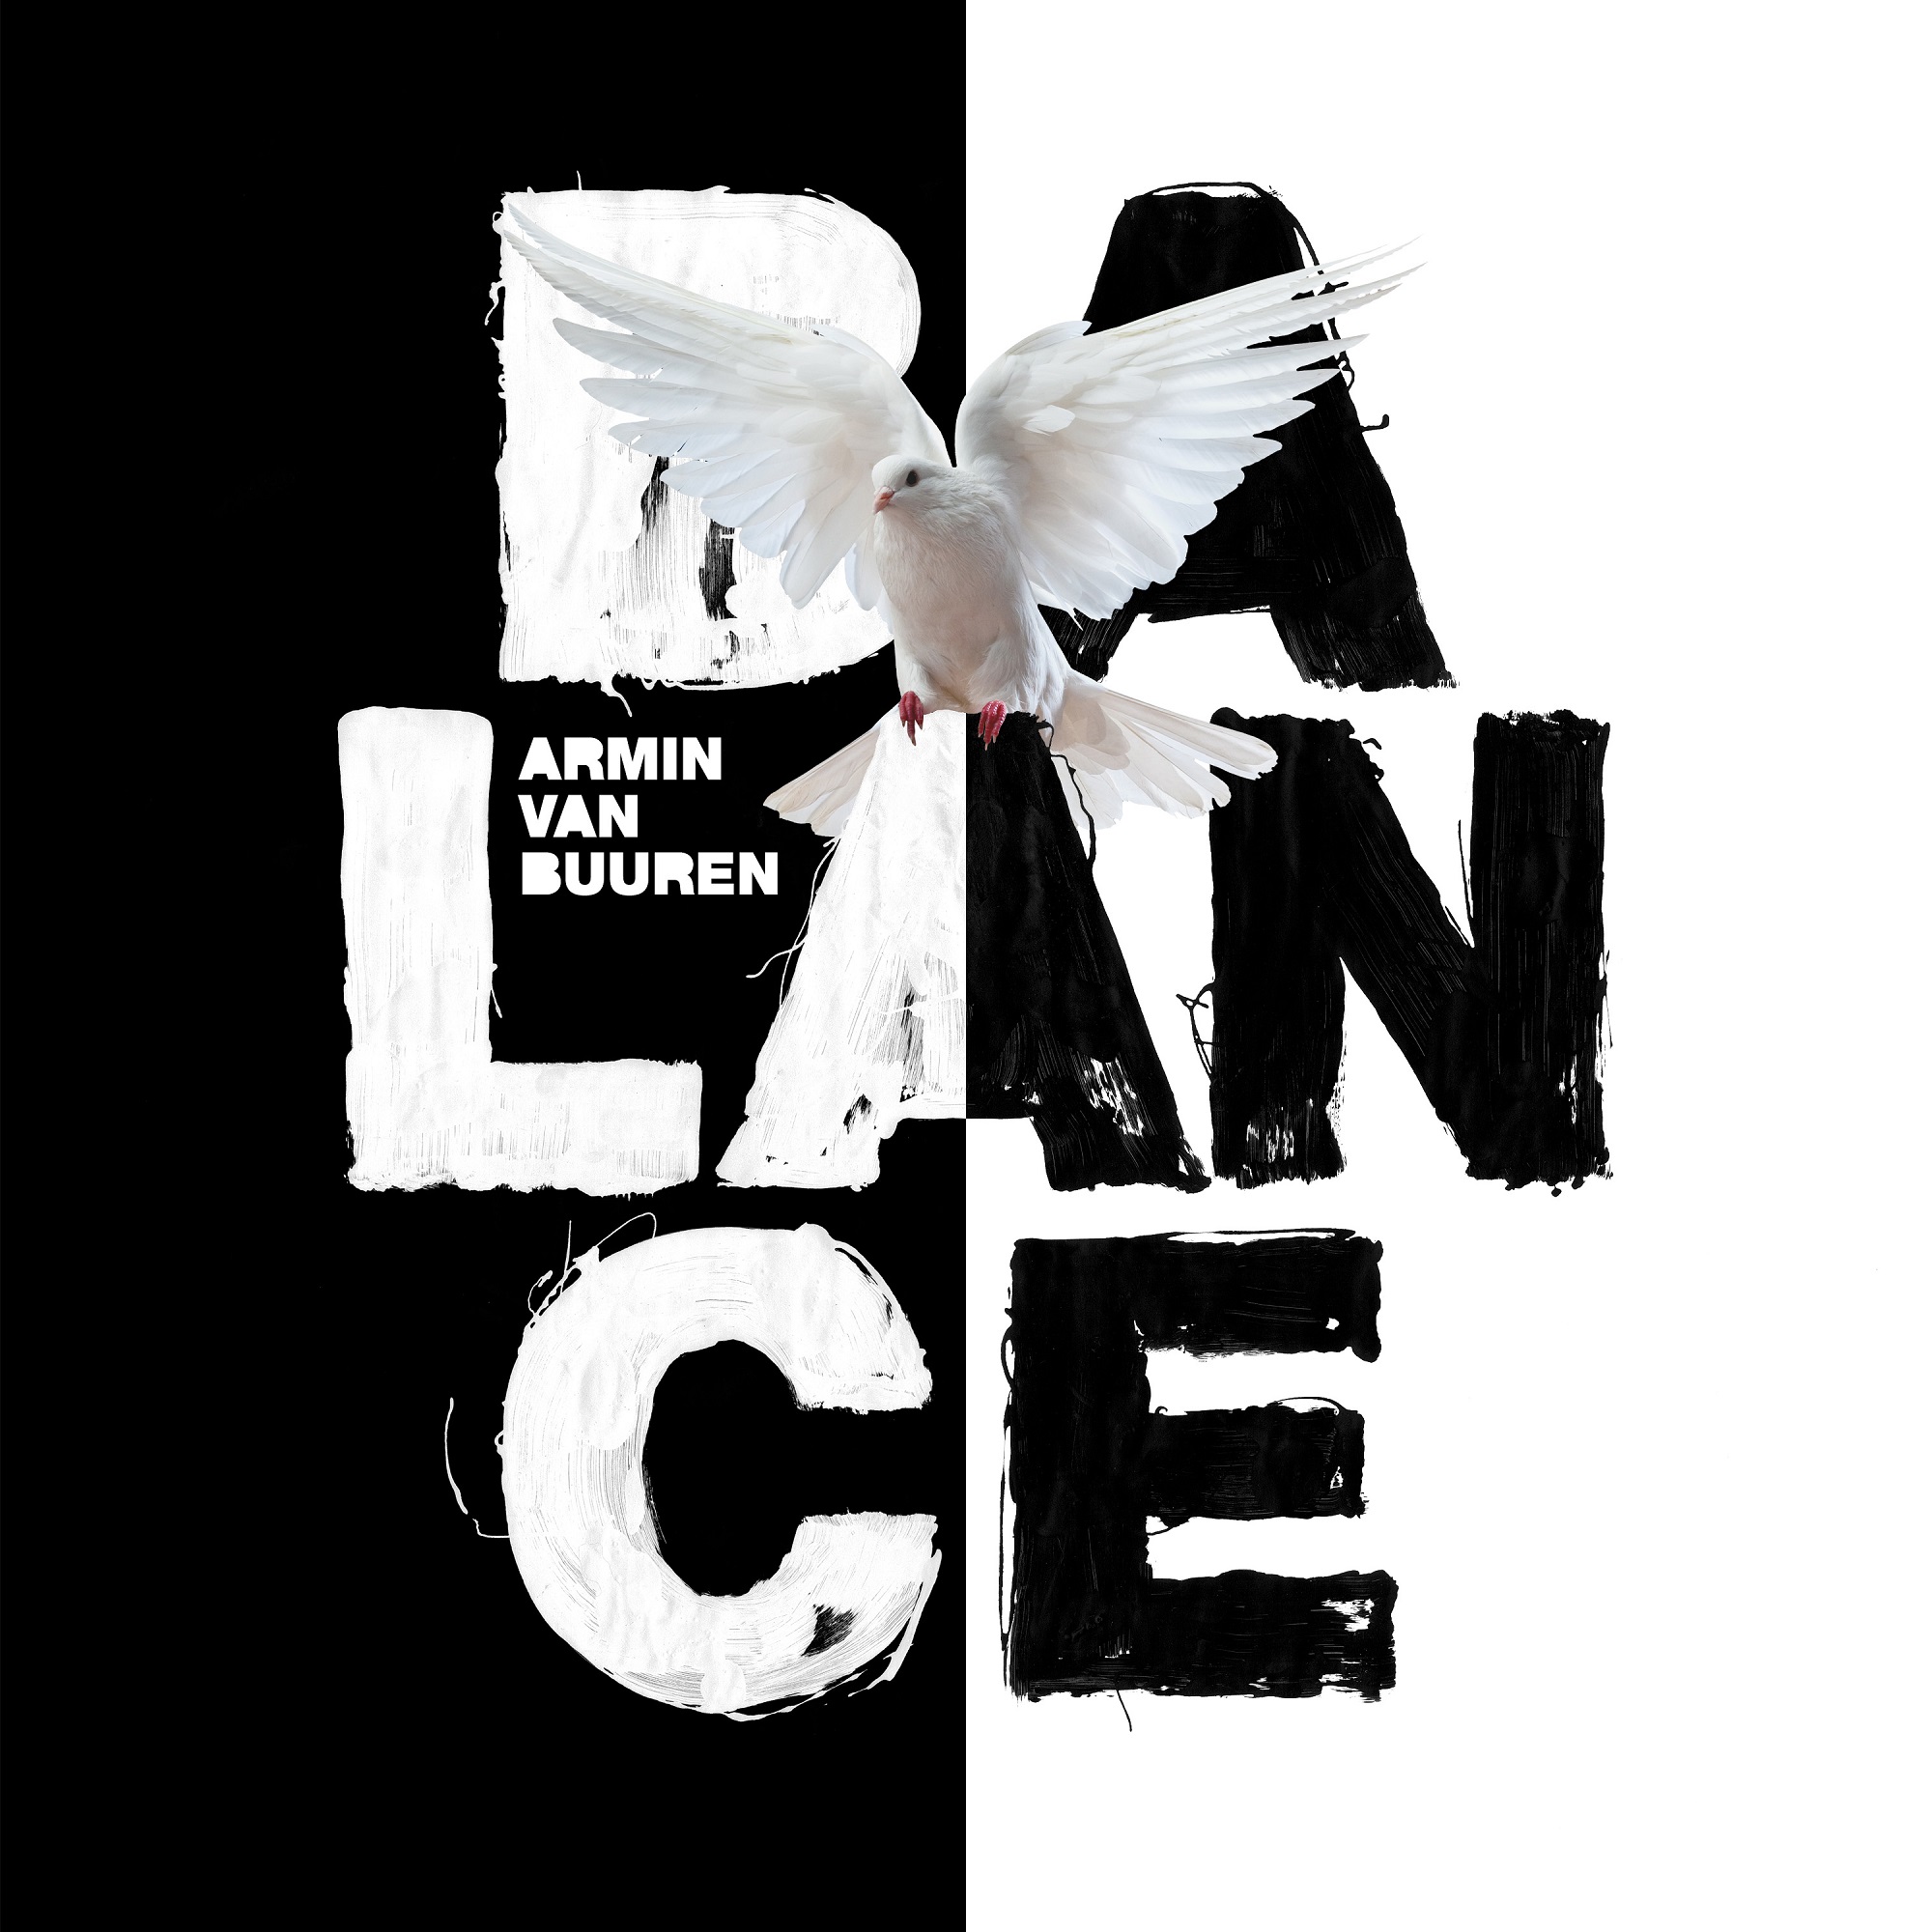 Armin van Buuren presents Balance on Armada Music